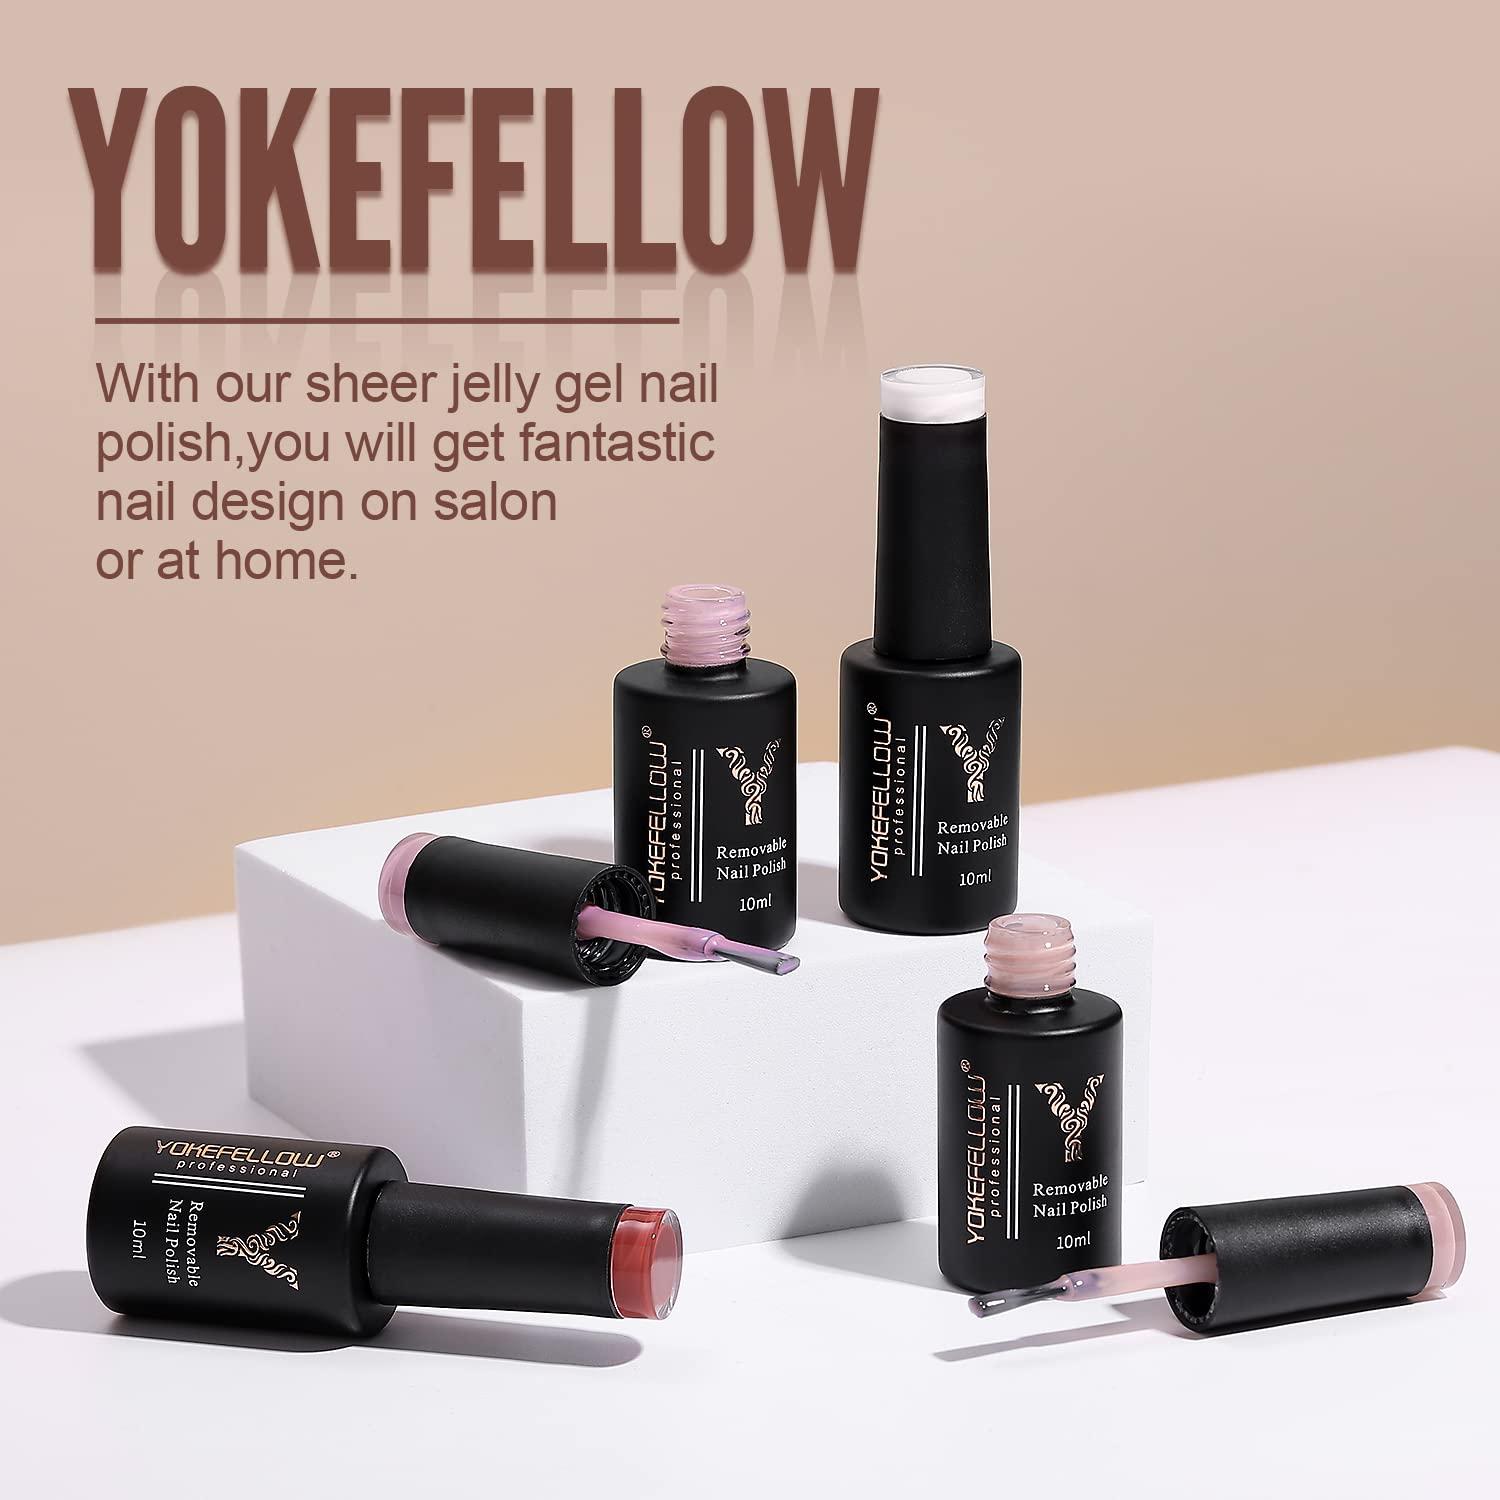 YOKE FELLOW Jelly Gel Nail Polish, 1 Pcs Neutral Jelly Pink UV Led Cure  Soak Off Gel Polish for Nail Art DIY Manicure at Home for Women Girls 0.33  fl